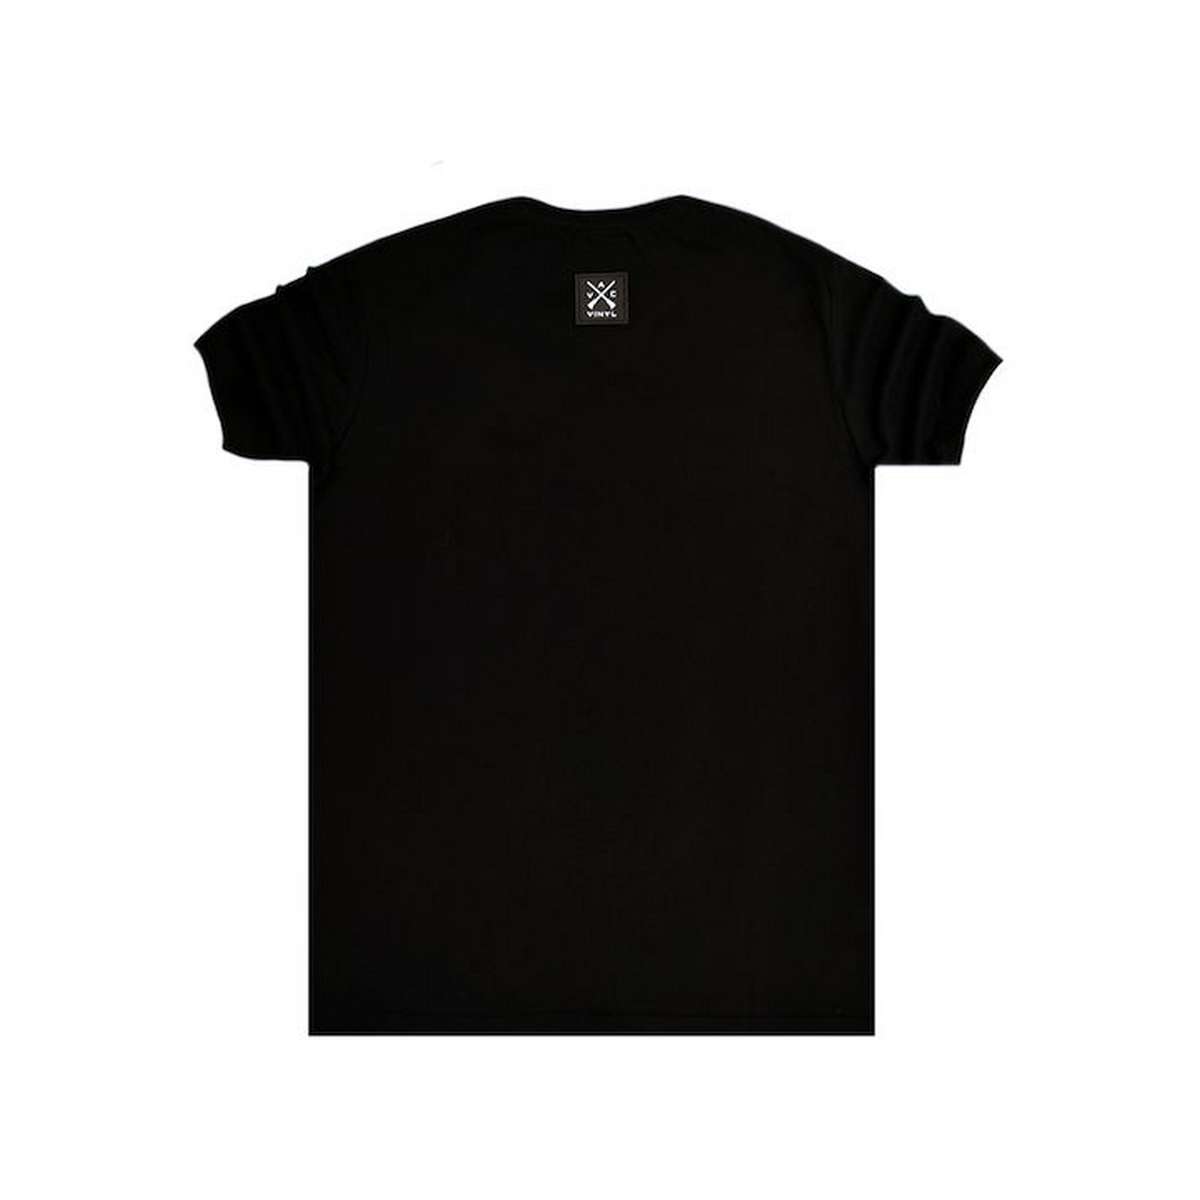 VINYL ART CLOTHING BOX LOGO T-SHIRT 63724-01 BLACK